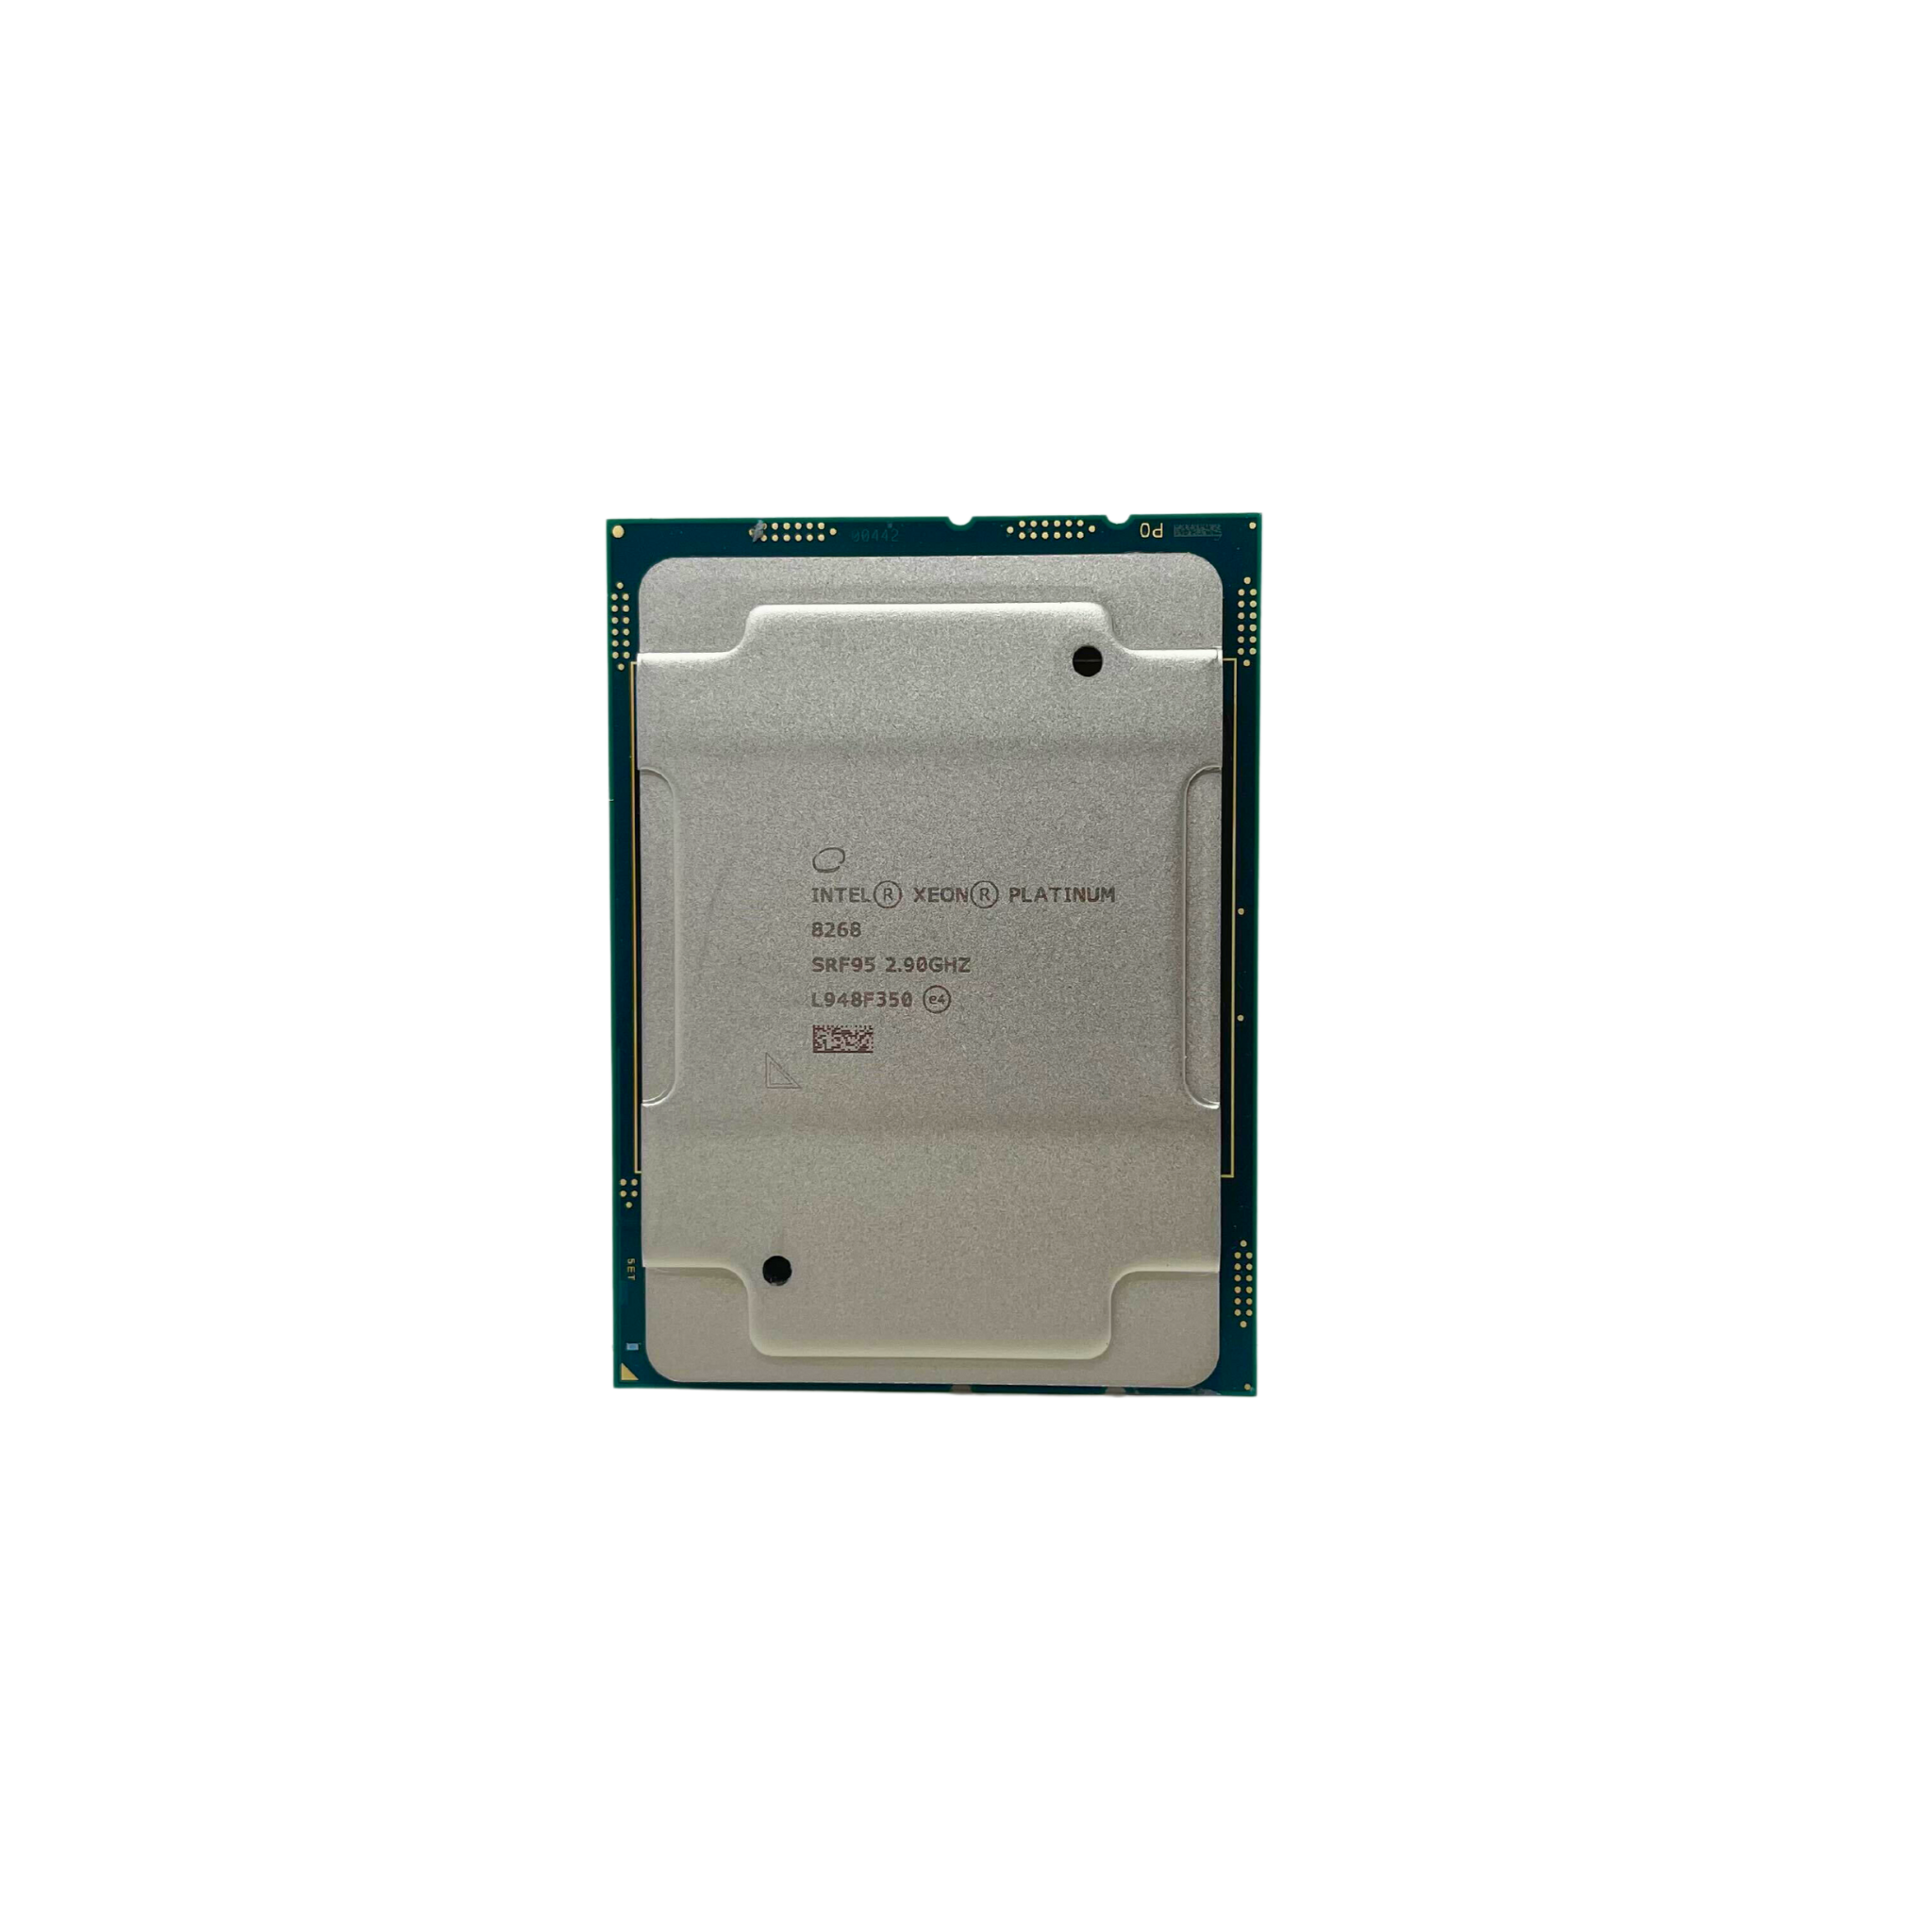 Intel Xeon Platinum 8268 24-Core 2.90GHz 35.75MB 205W LGA3647 CPU Processor  (T7920 8268-CPUonly)